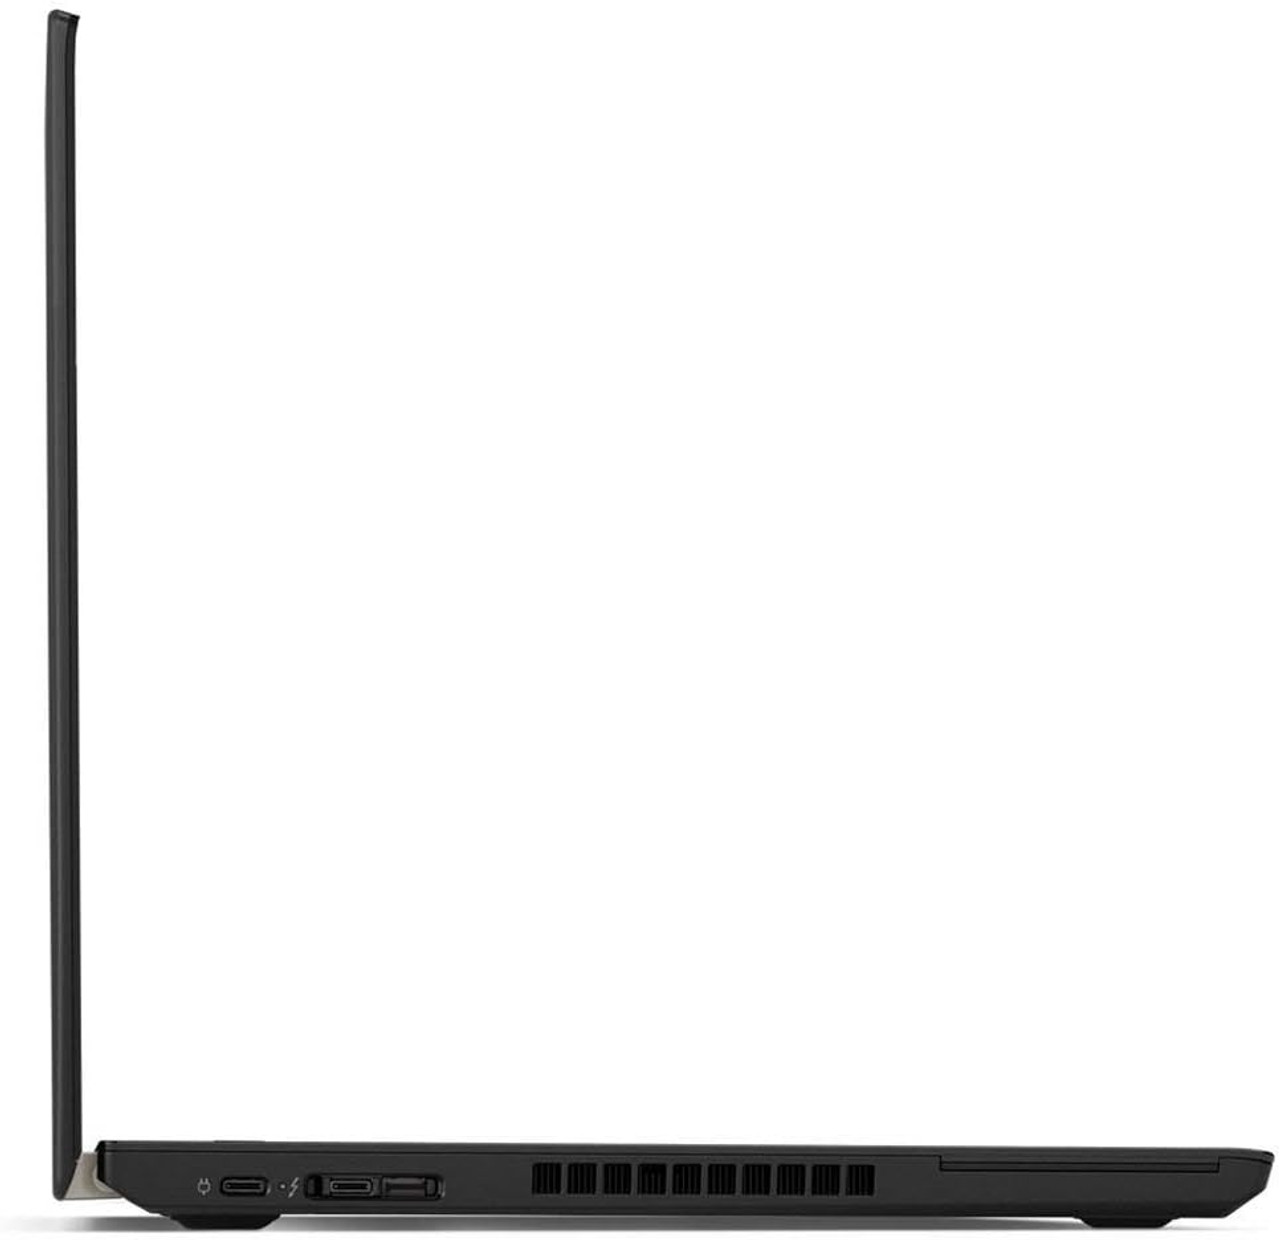 Lenovo ThinkPad T480s i5-8250U @ 1.60GHz 8GB RAM 256GB Hard Drive 4G LTE